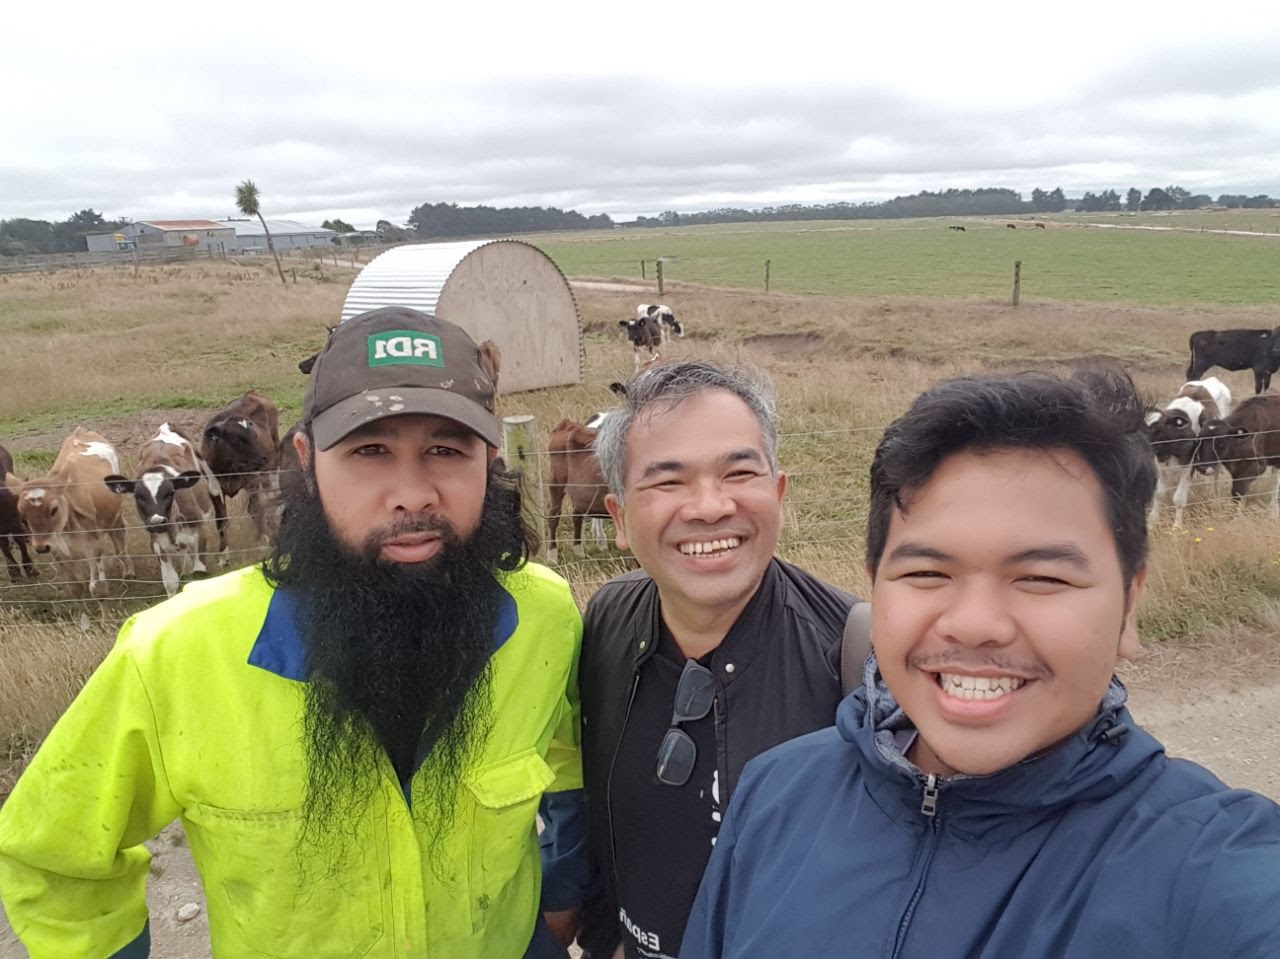 Penuturan Aqua Dwipayana terhadap Pengusaha Sapi Perah Indonesia di New Zealand